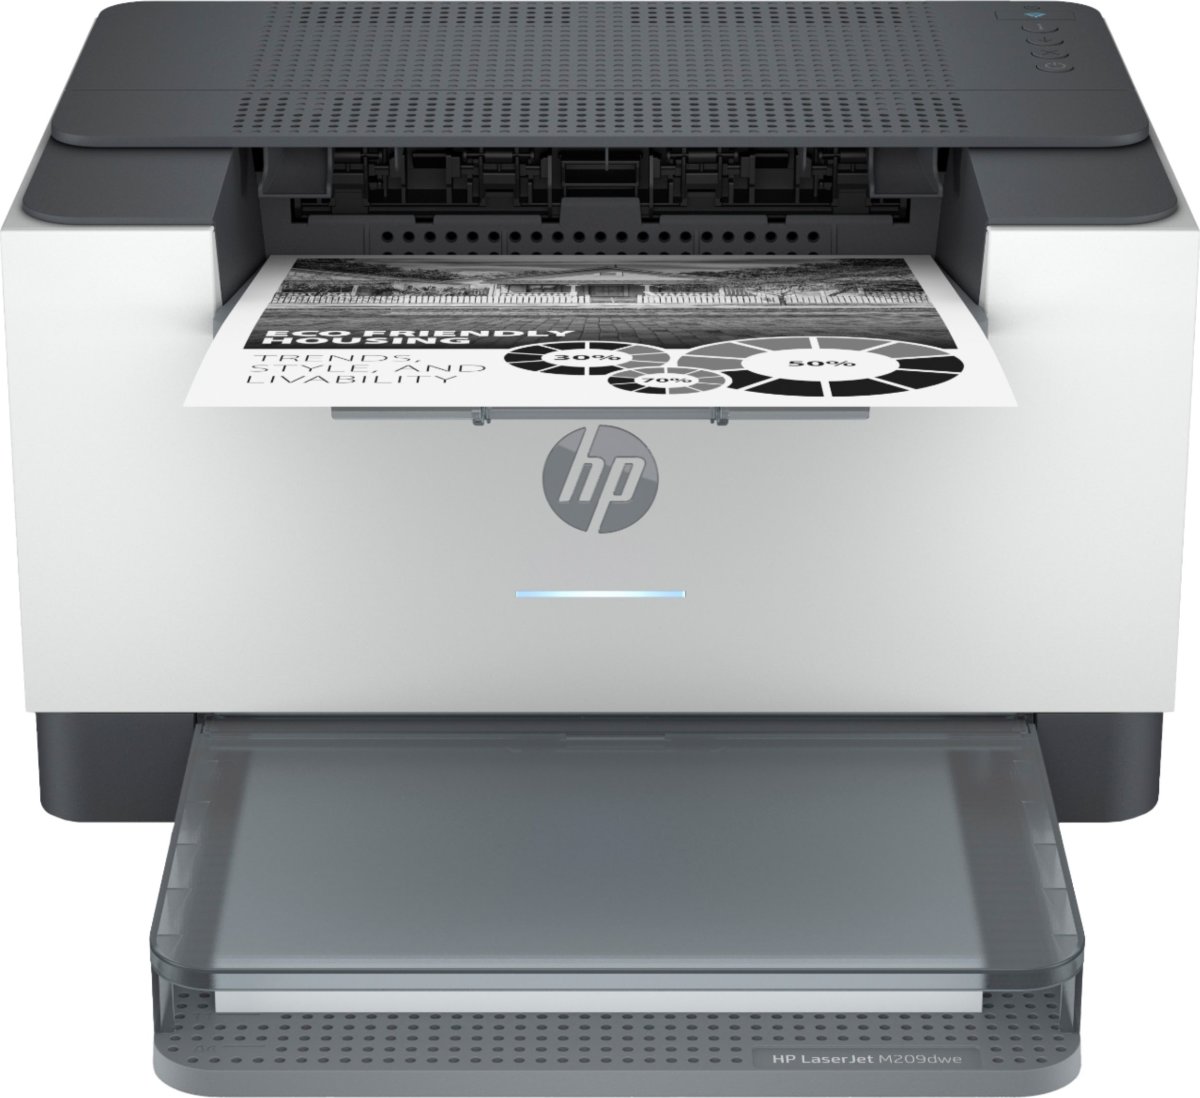 HP LaserJet M209dwe A4 sort/hvid laserprinter